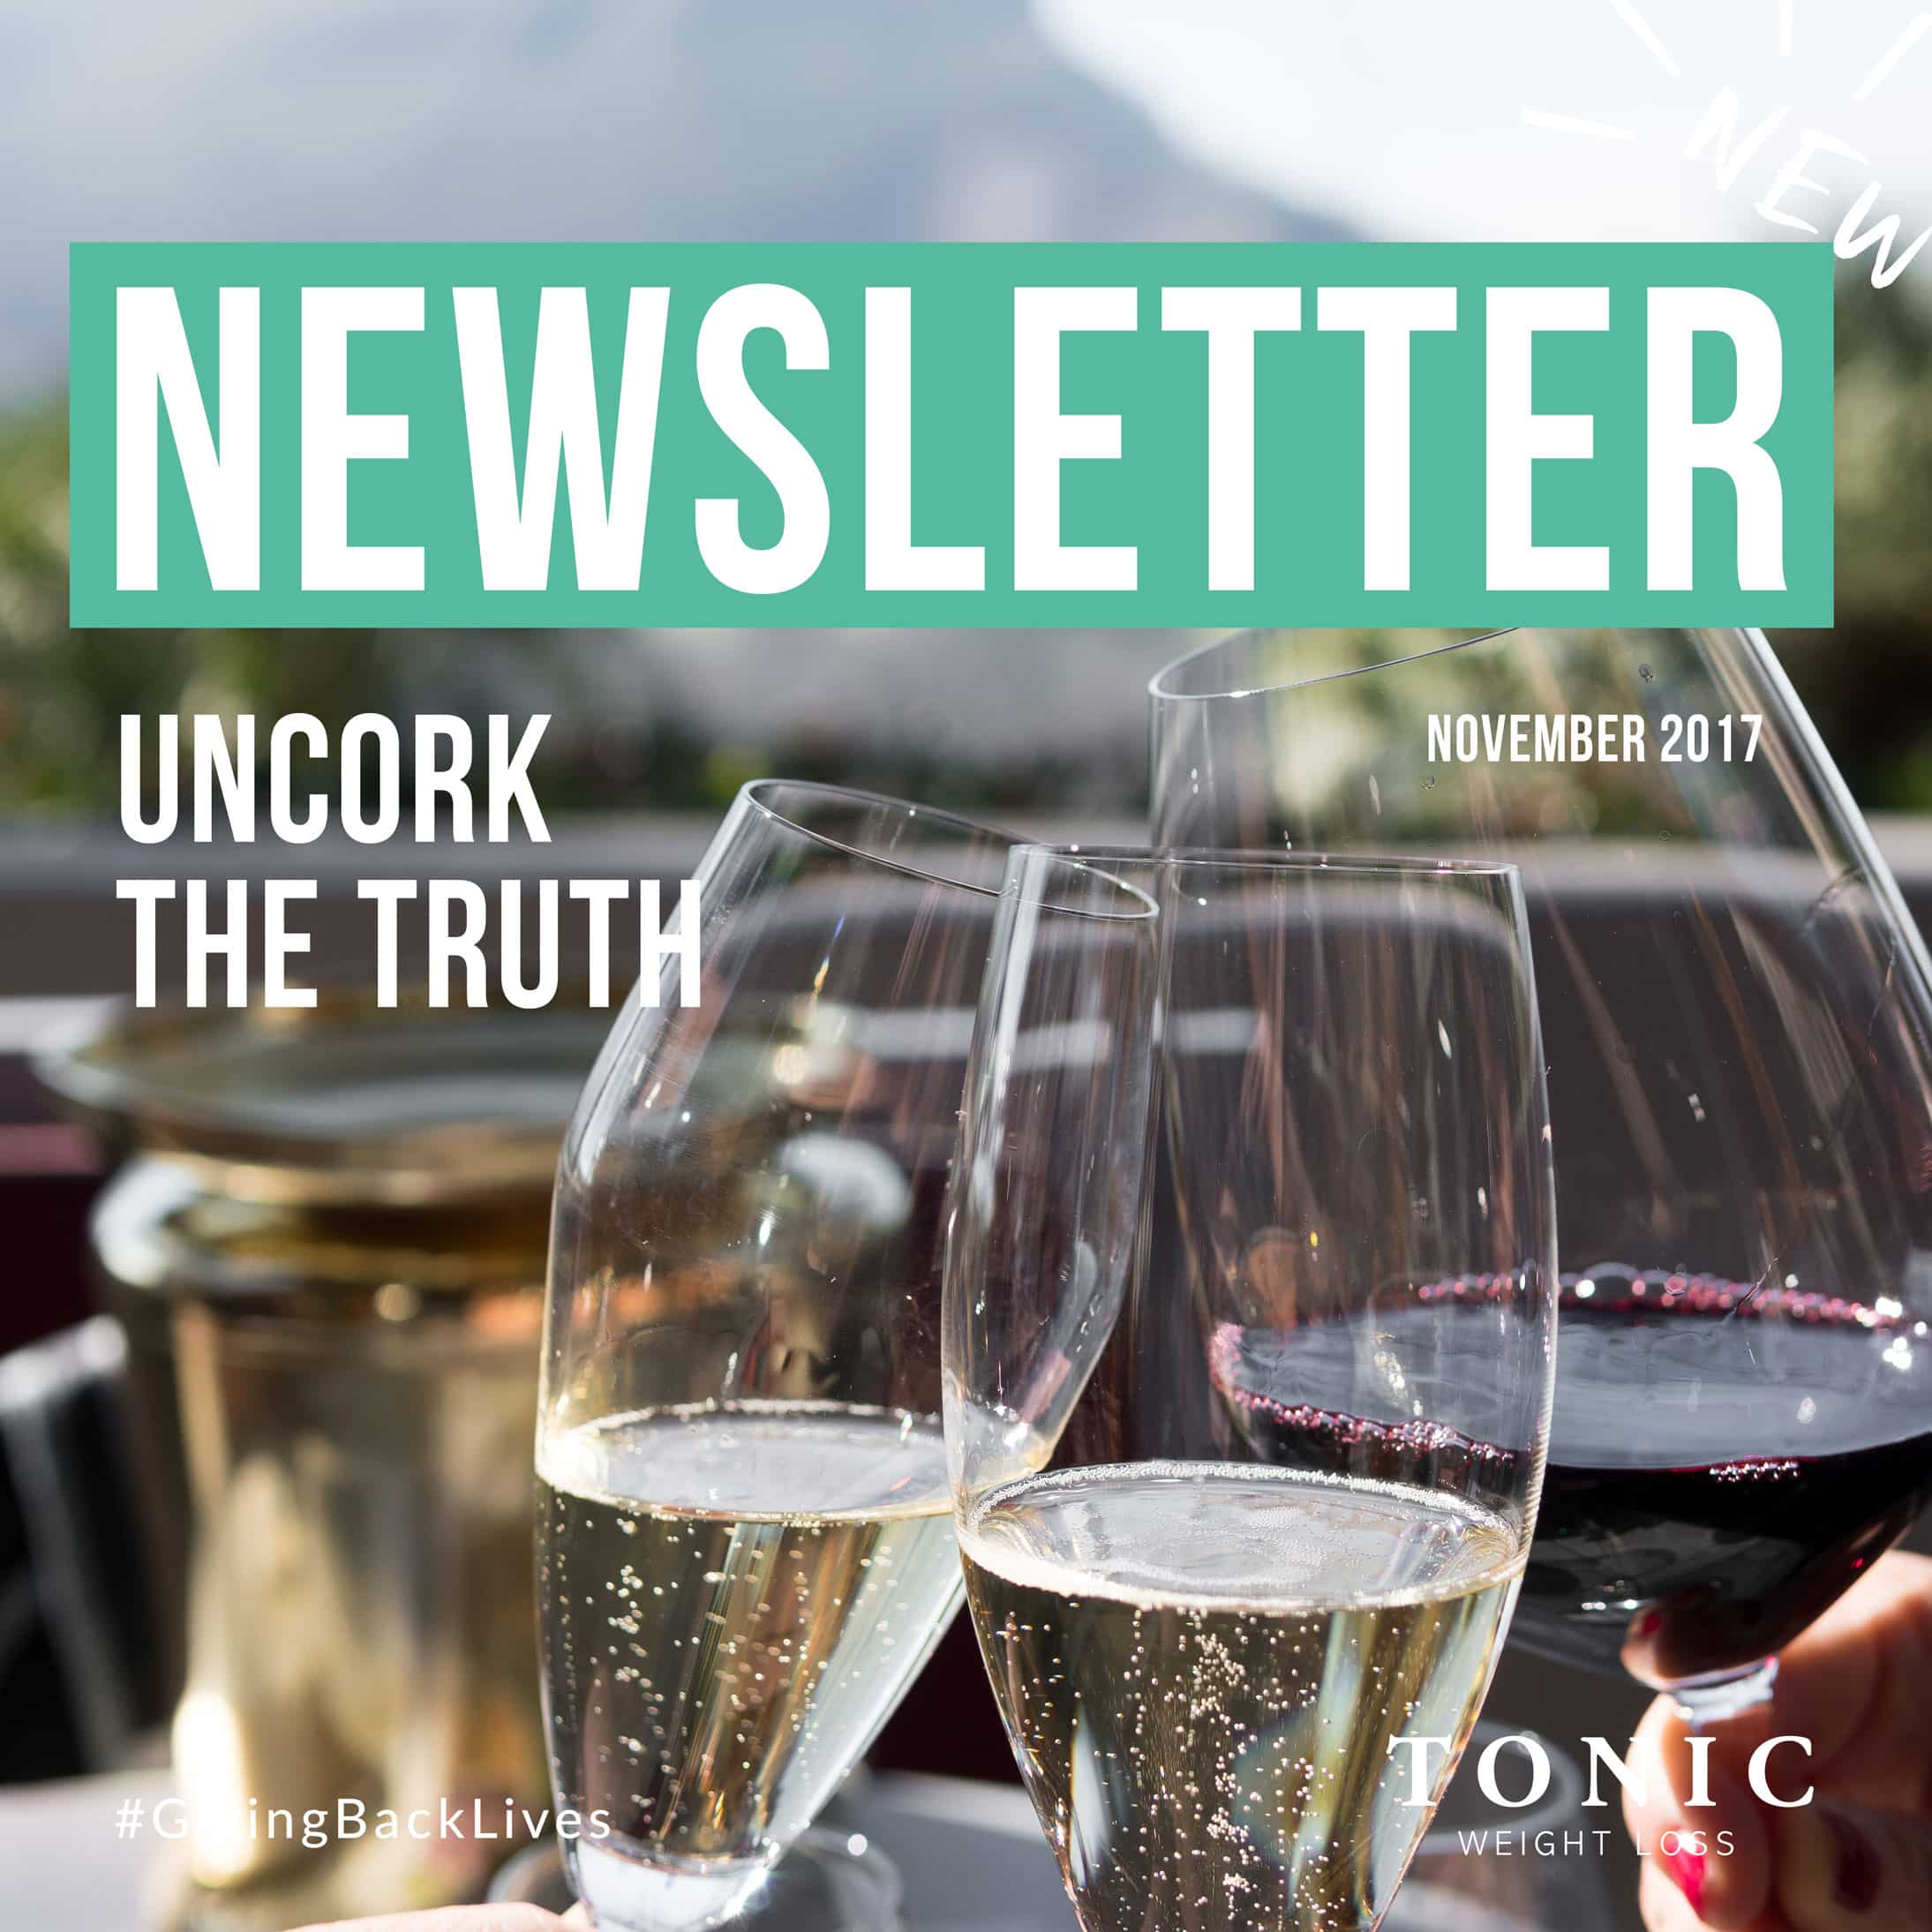 Tonic-Newletter---27-November-2017---uncork-the-truth